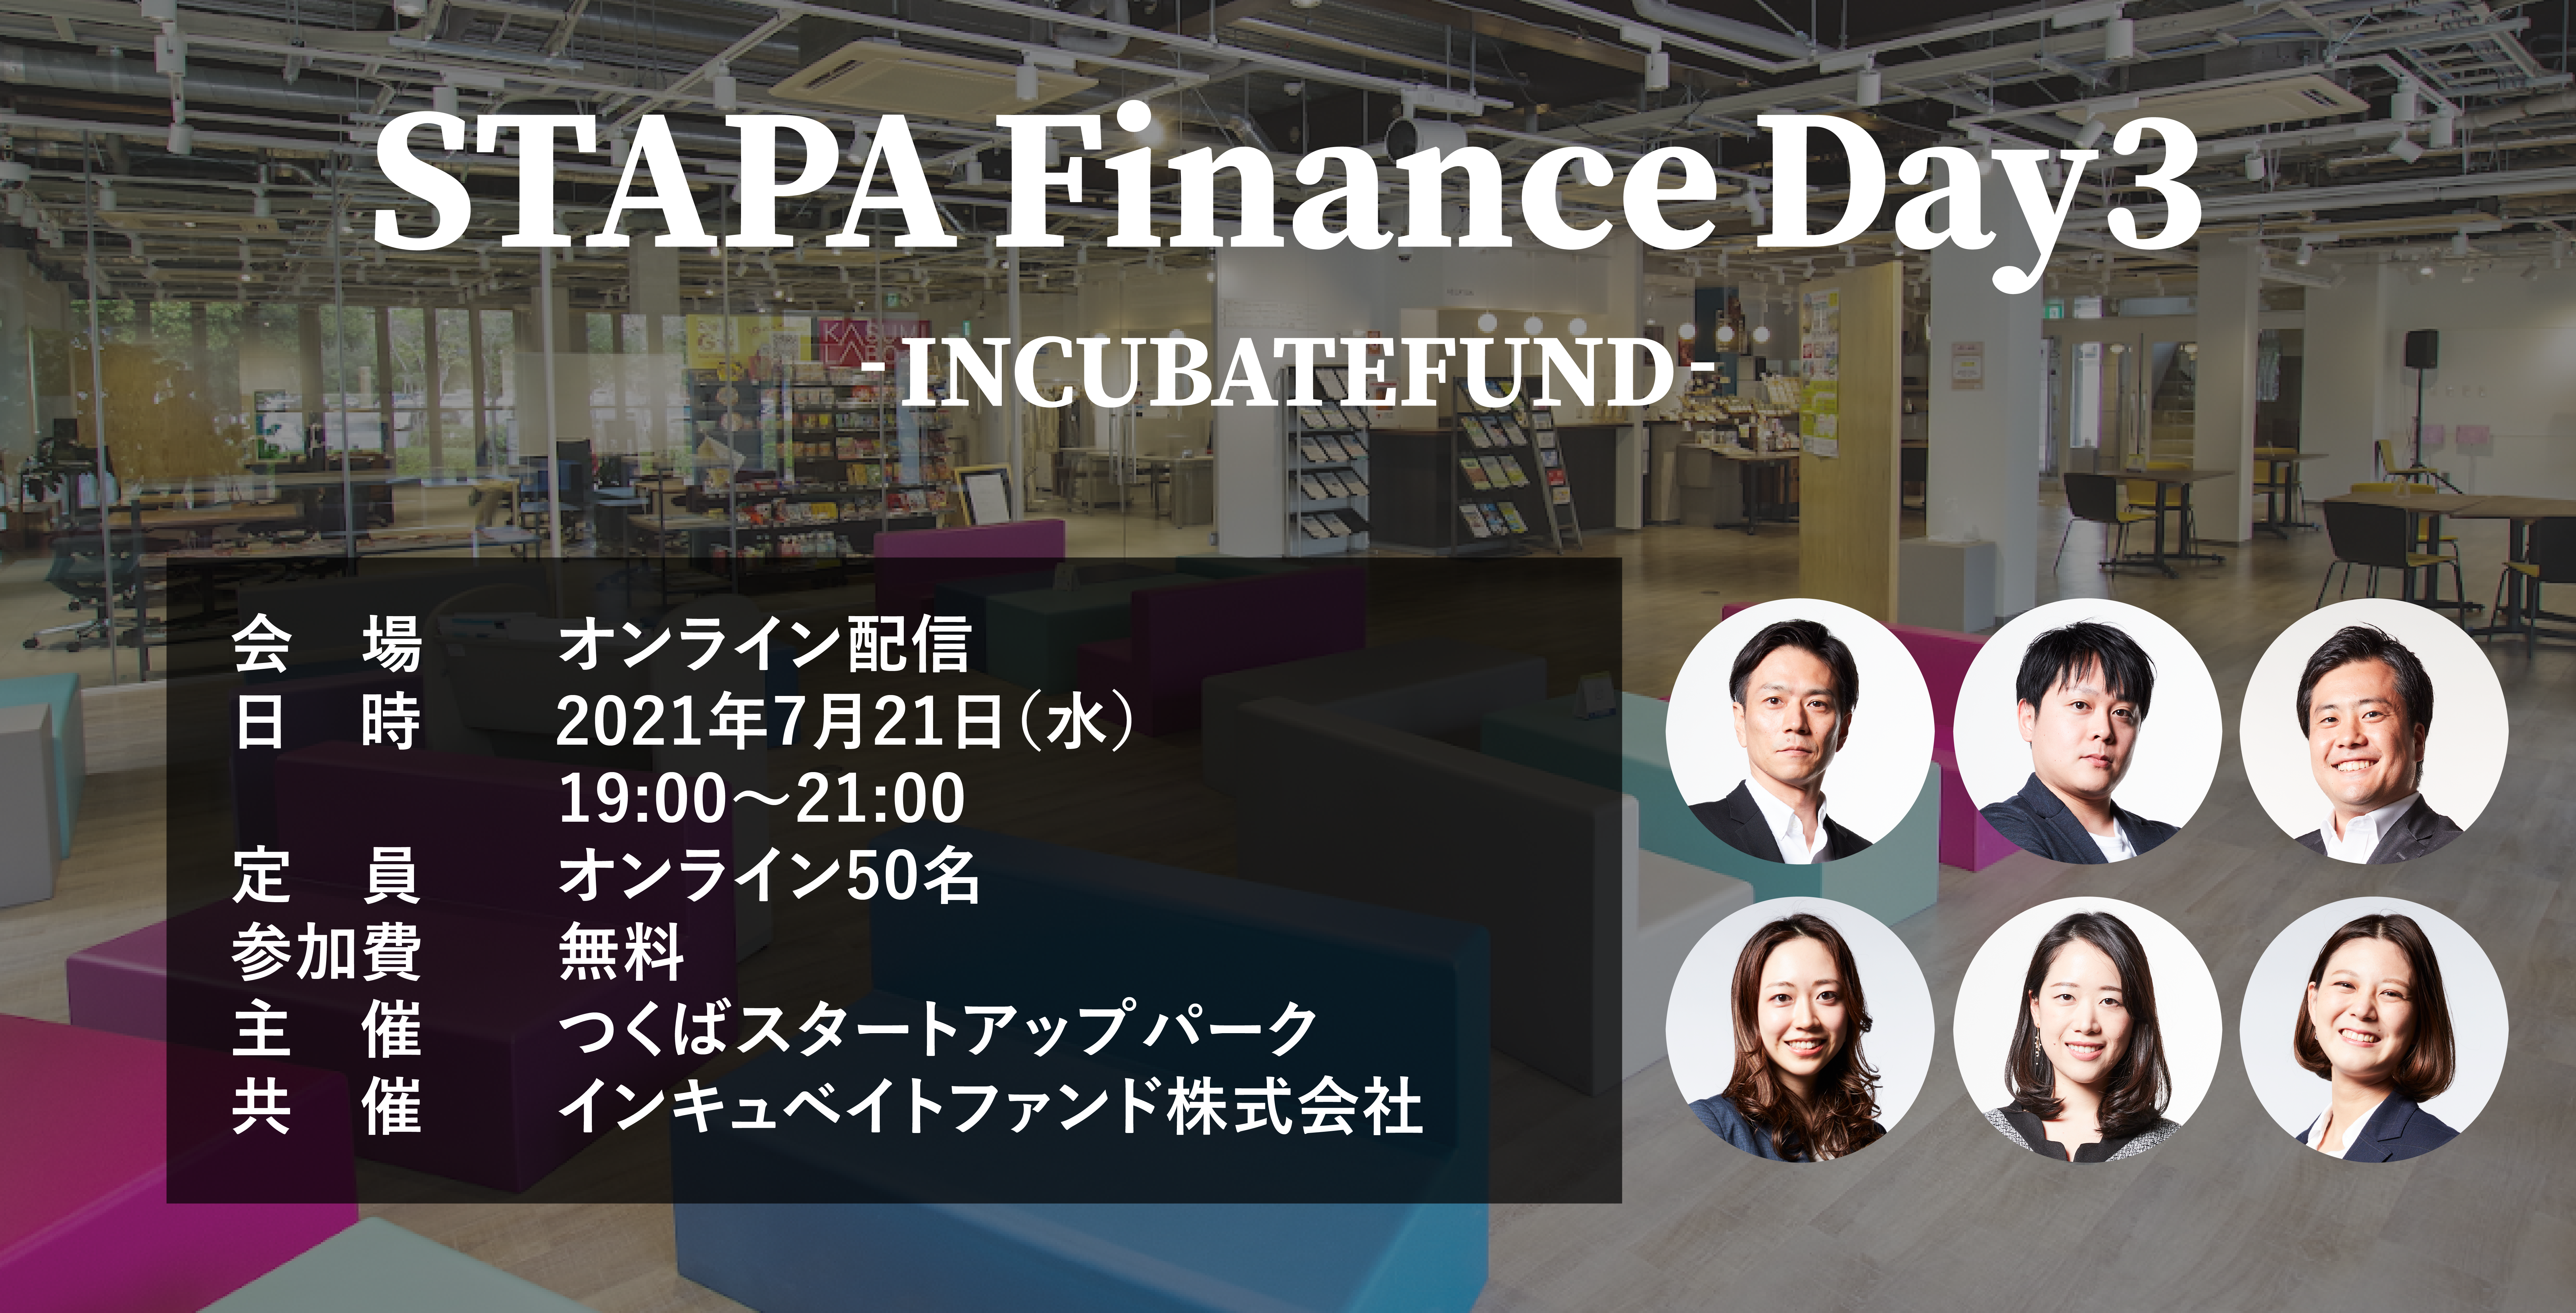 STAPA Finance Day3 -INCUBATEFUND-